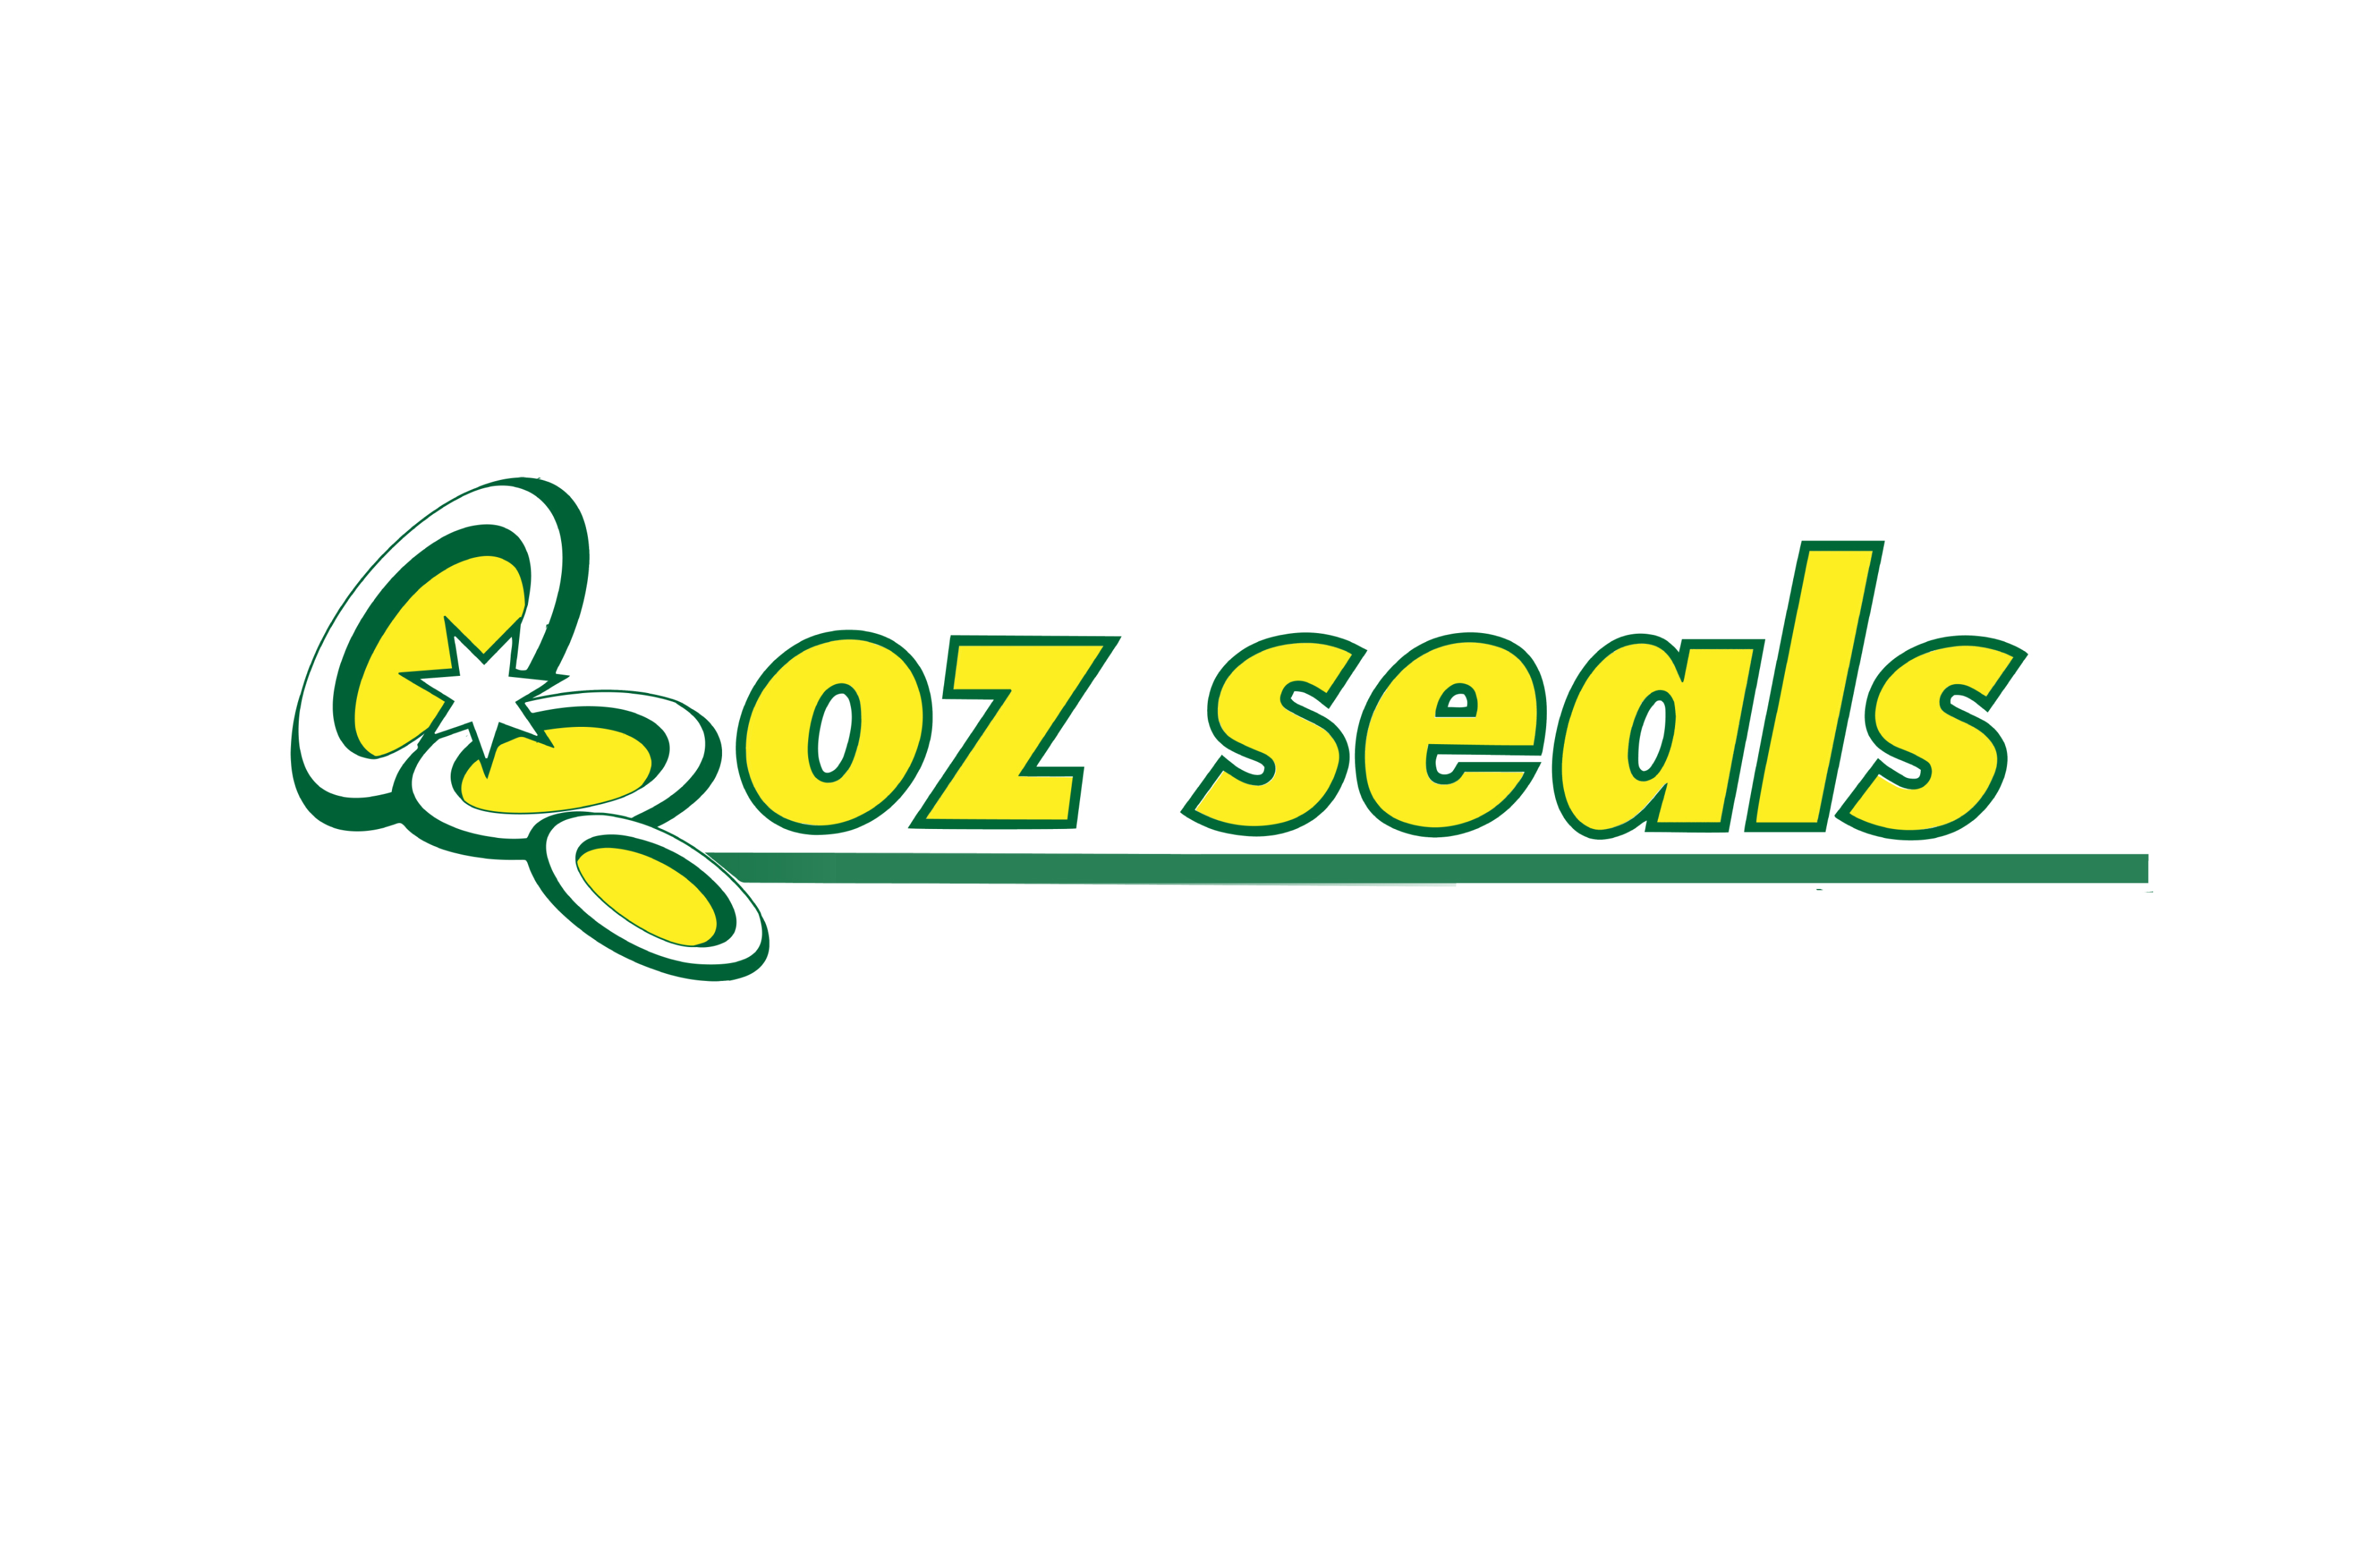 The brands OZ SEALS